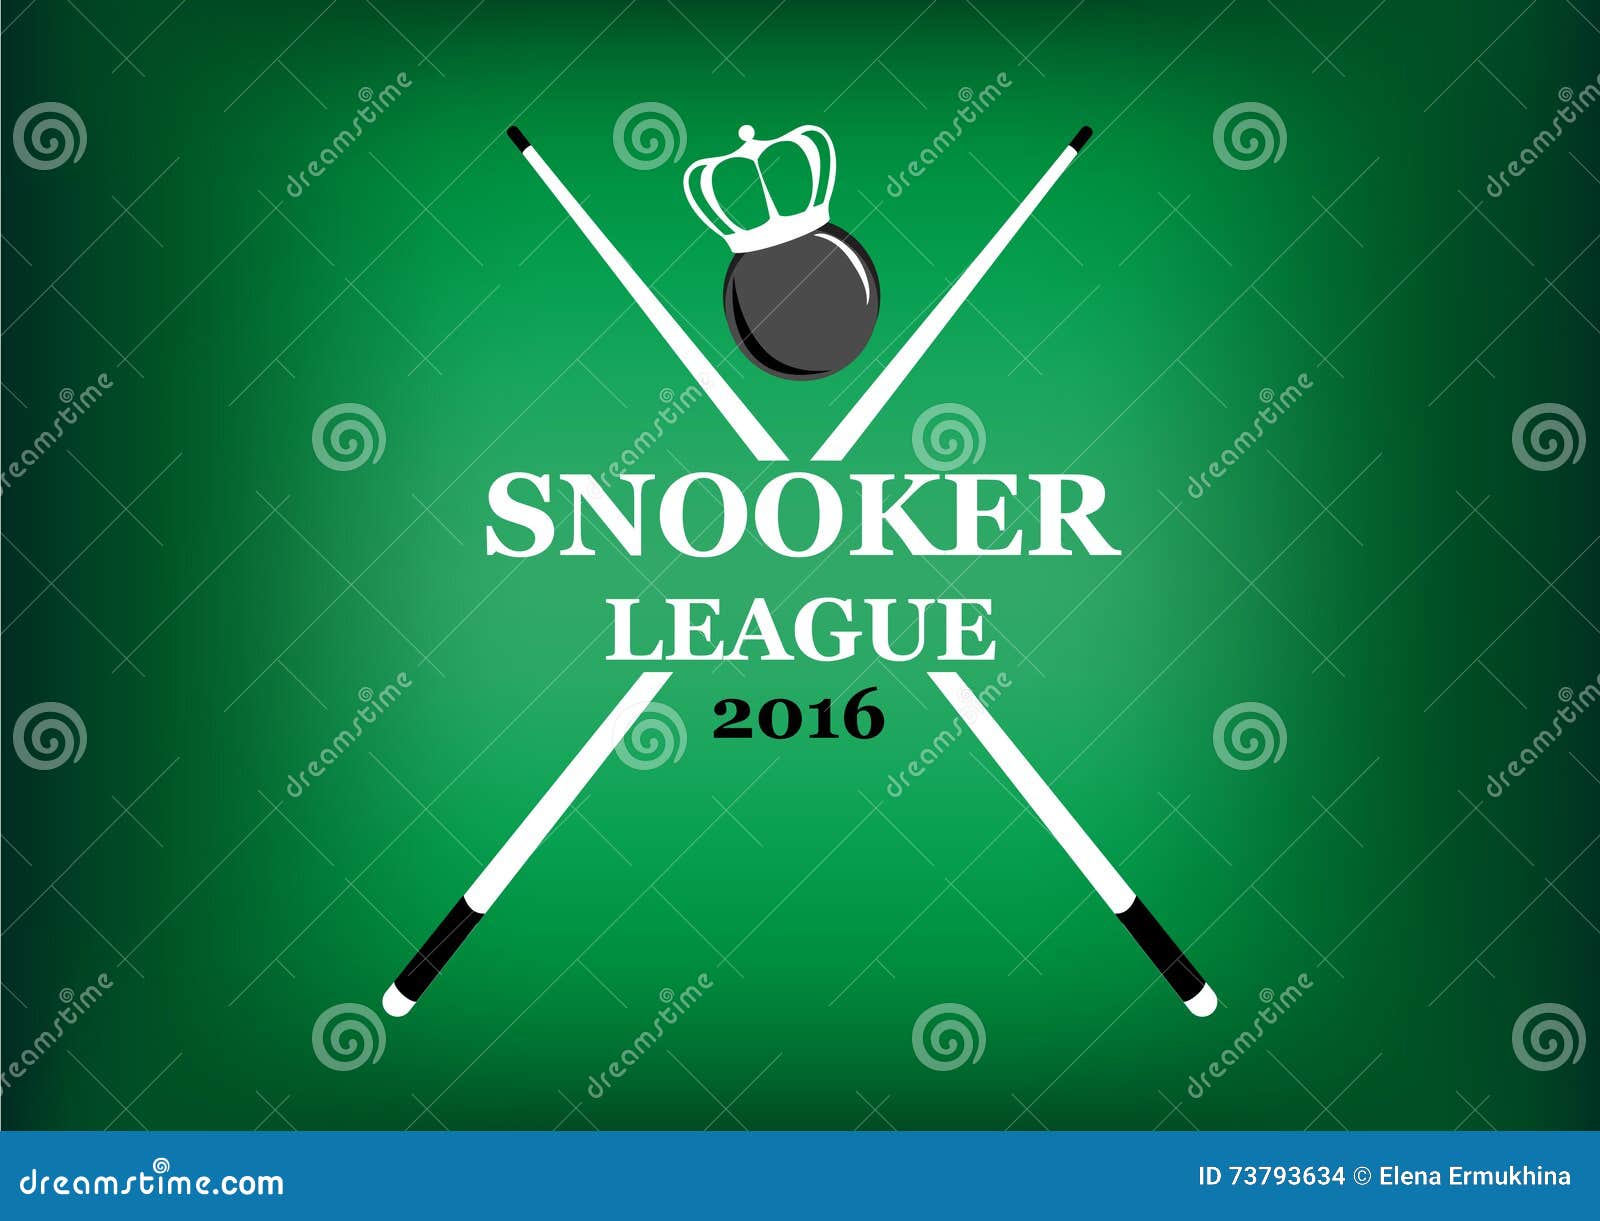 Snooker League Emblem on a Green Background Stock Vector